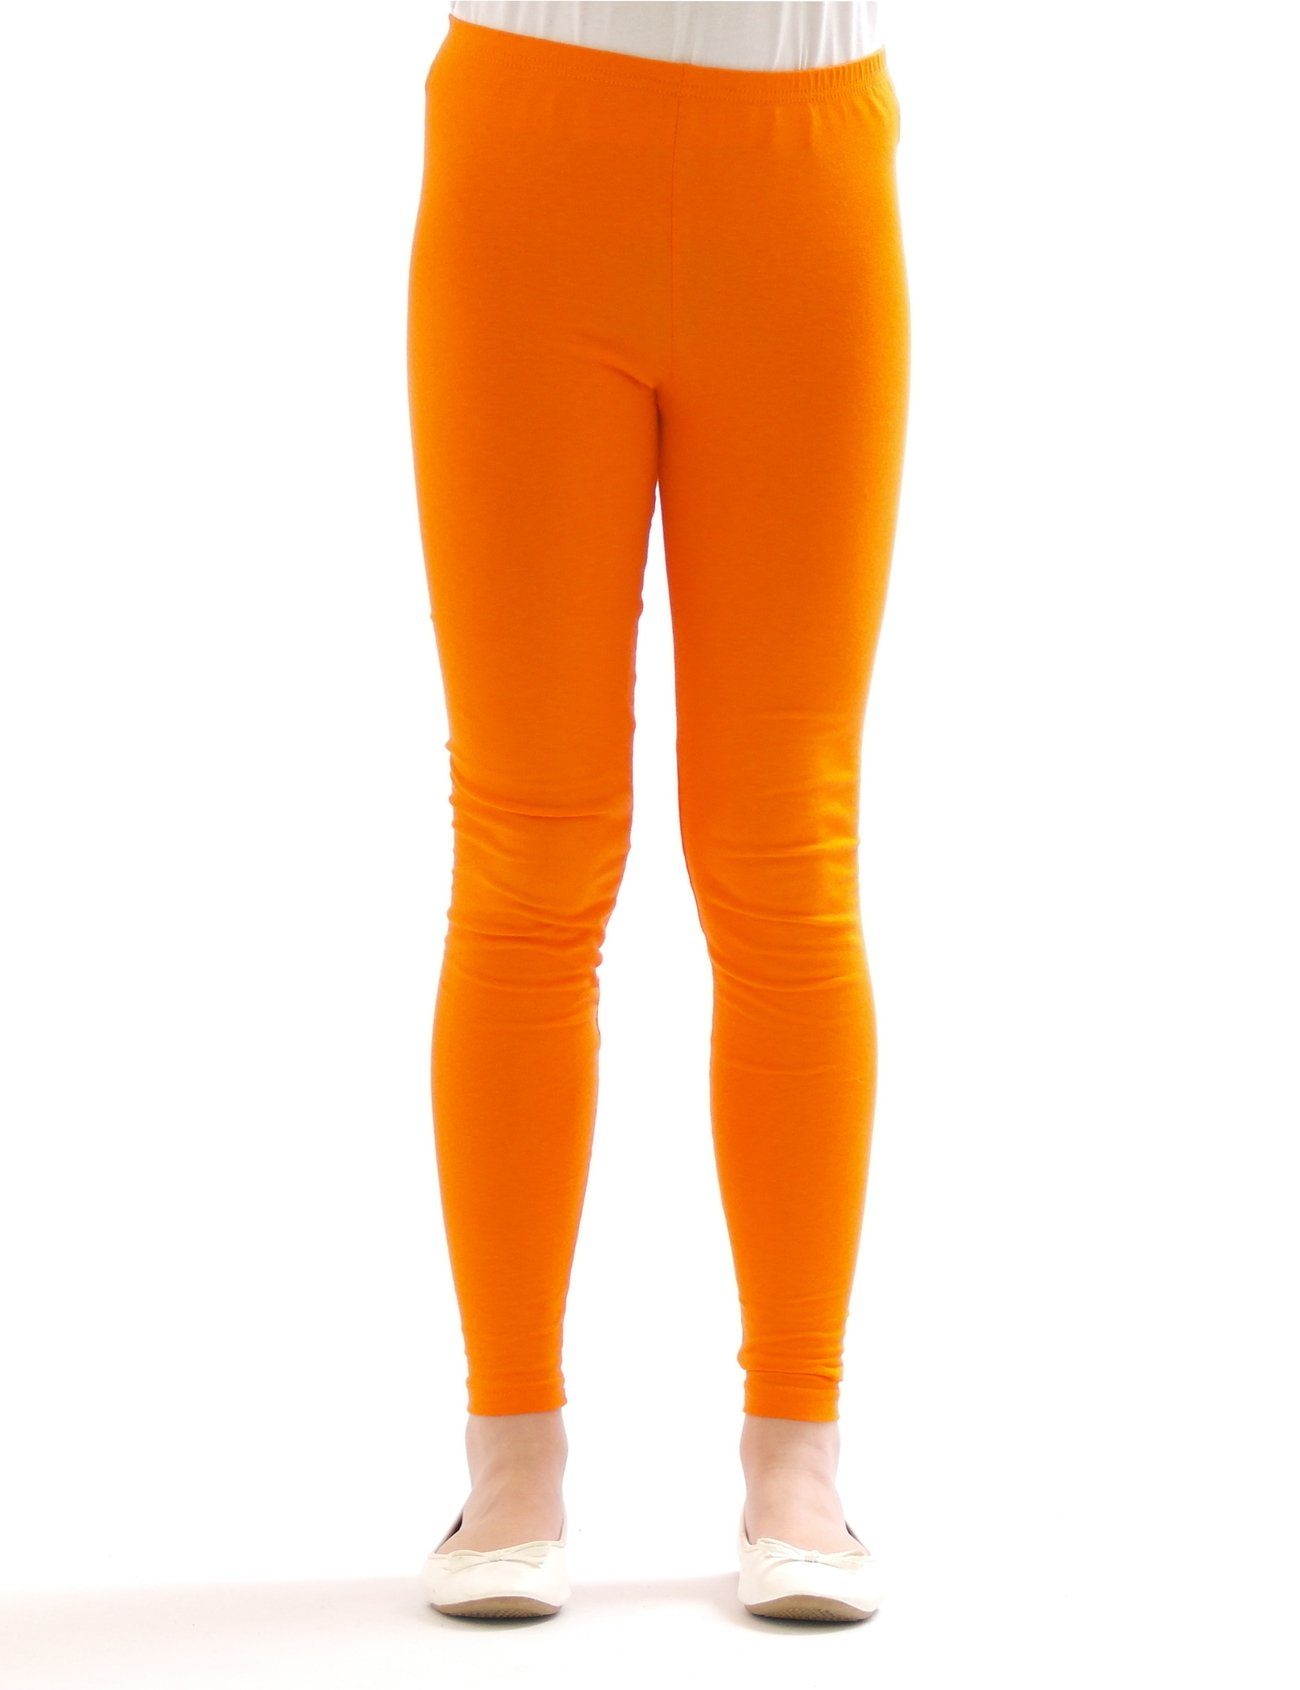 Hose Kinder lang Leggings Orange Baumwolle blickdicht Leggings SYS aus Mädchen